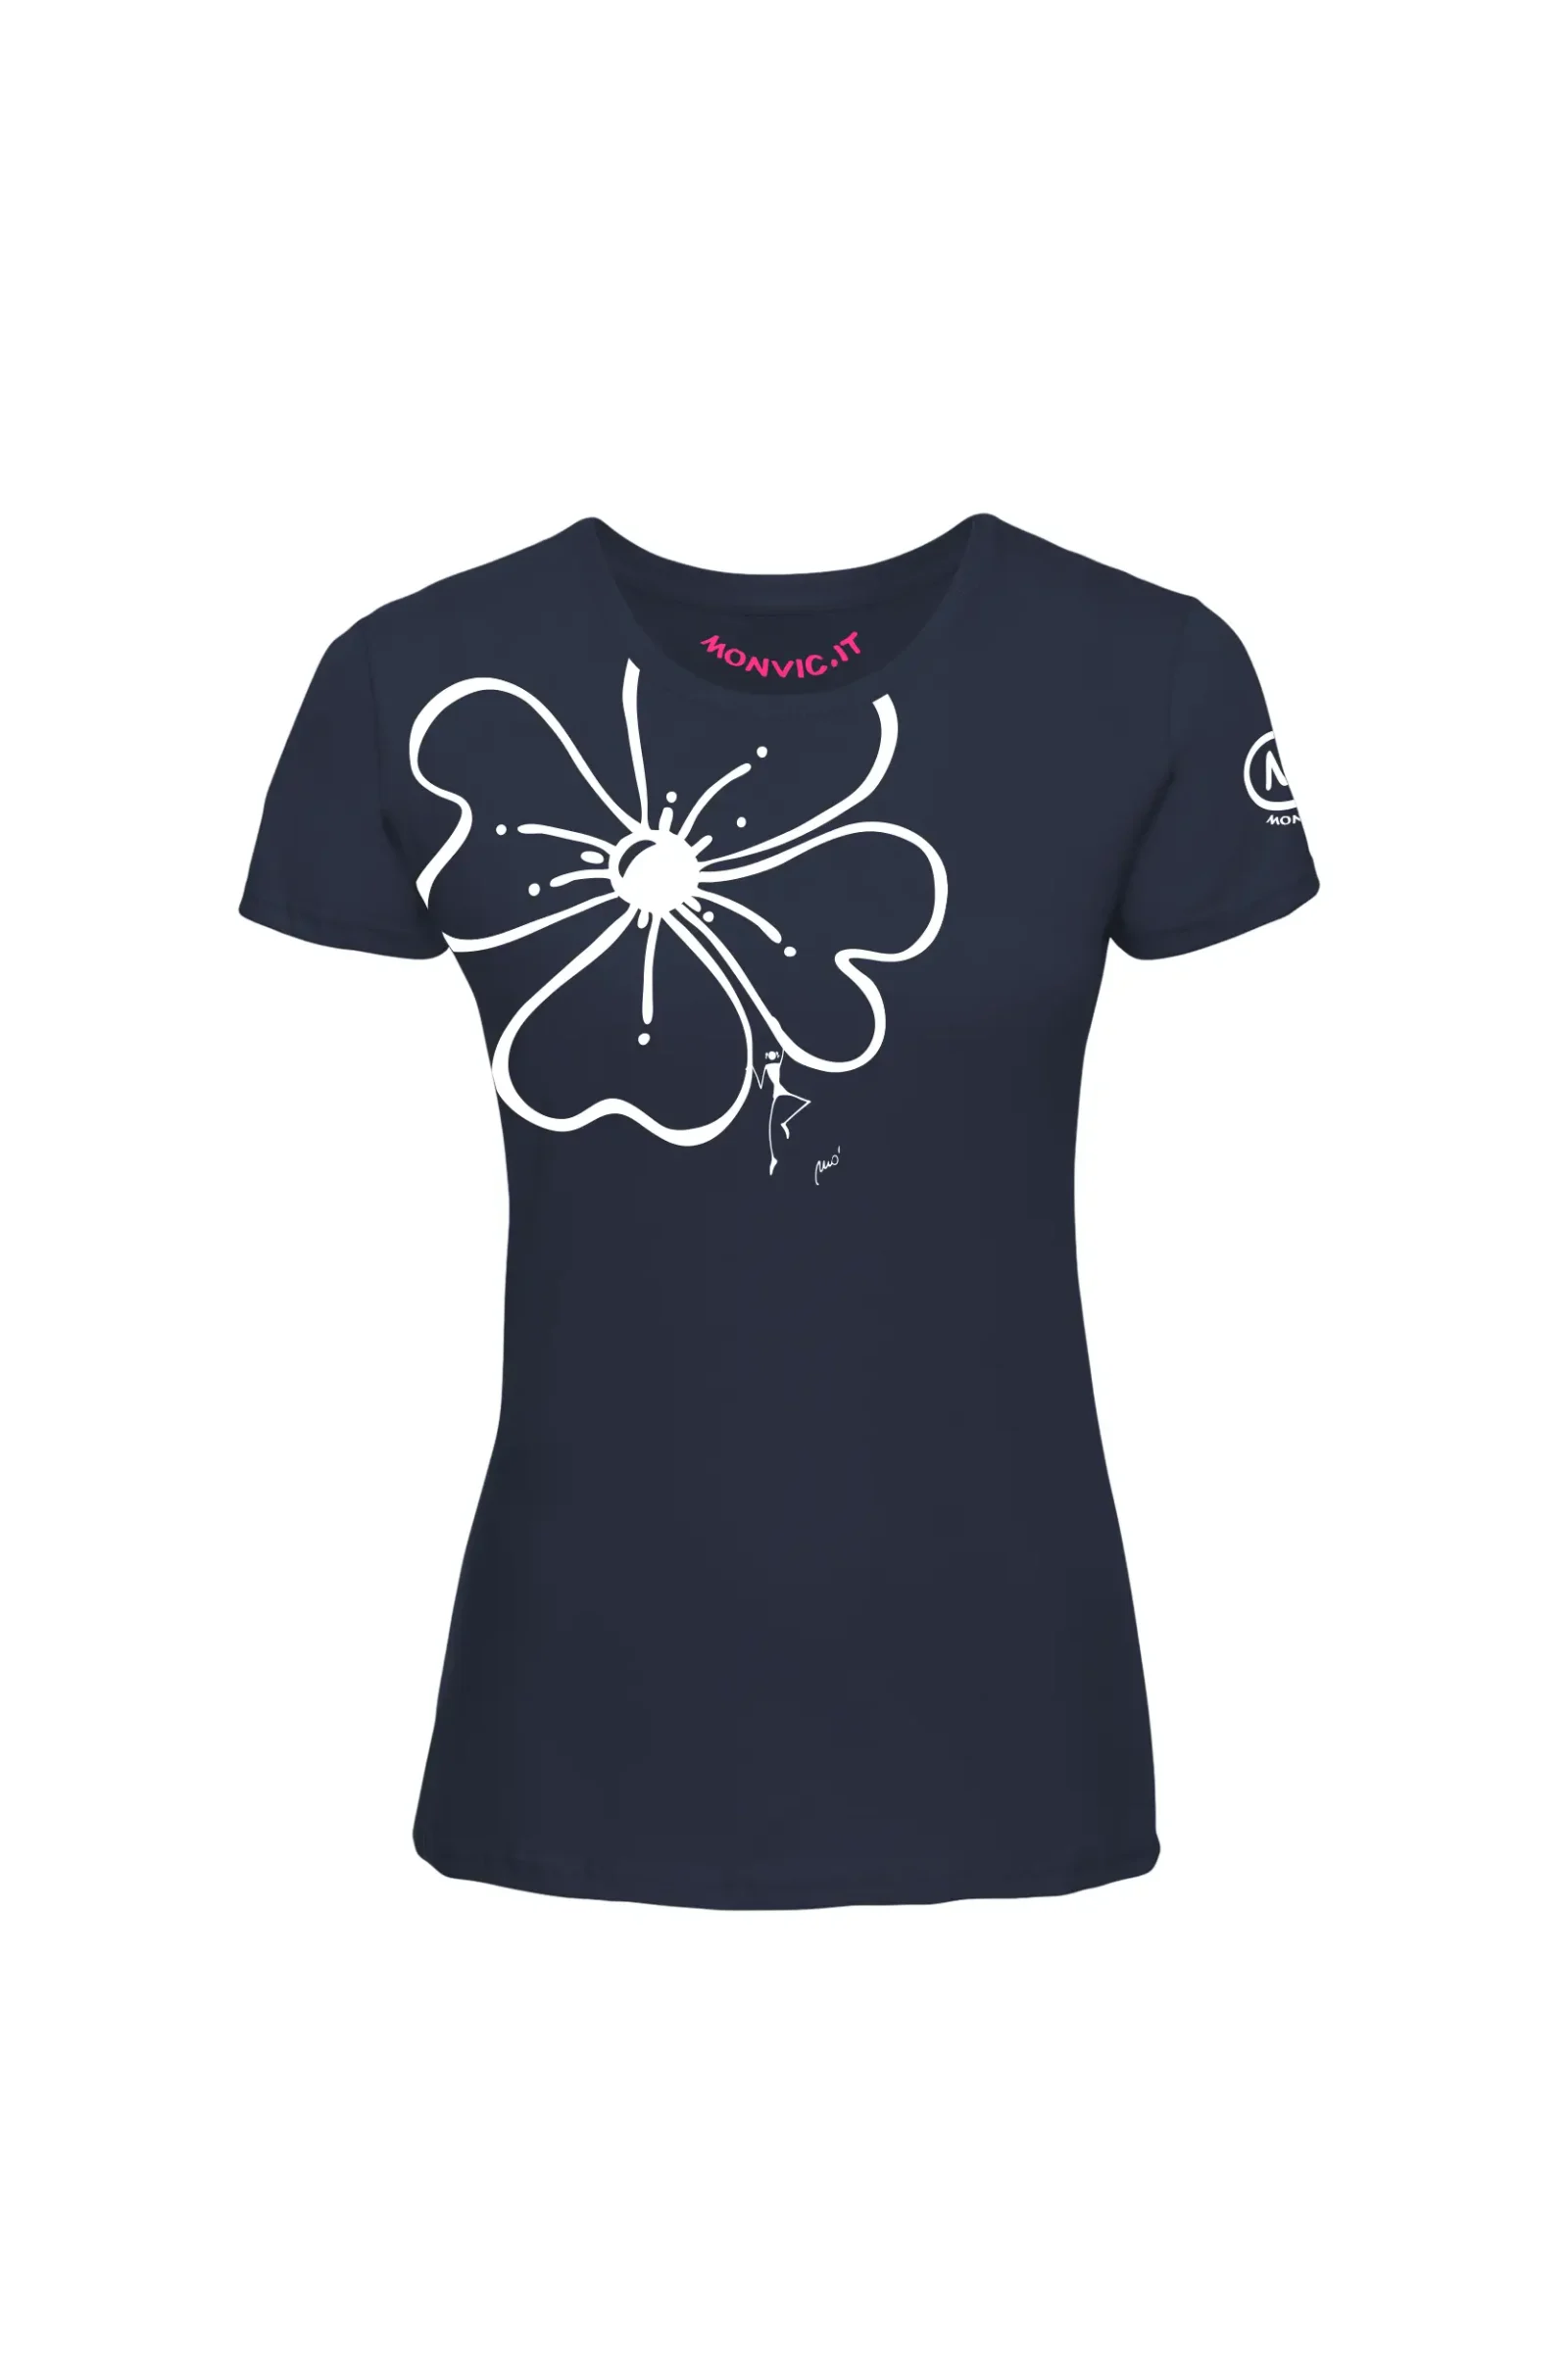 T-shirt escalade femme - coton bleu marine - "Superflower" SHARON MONVIC